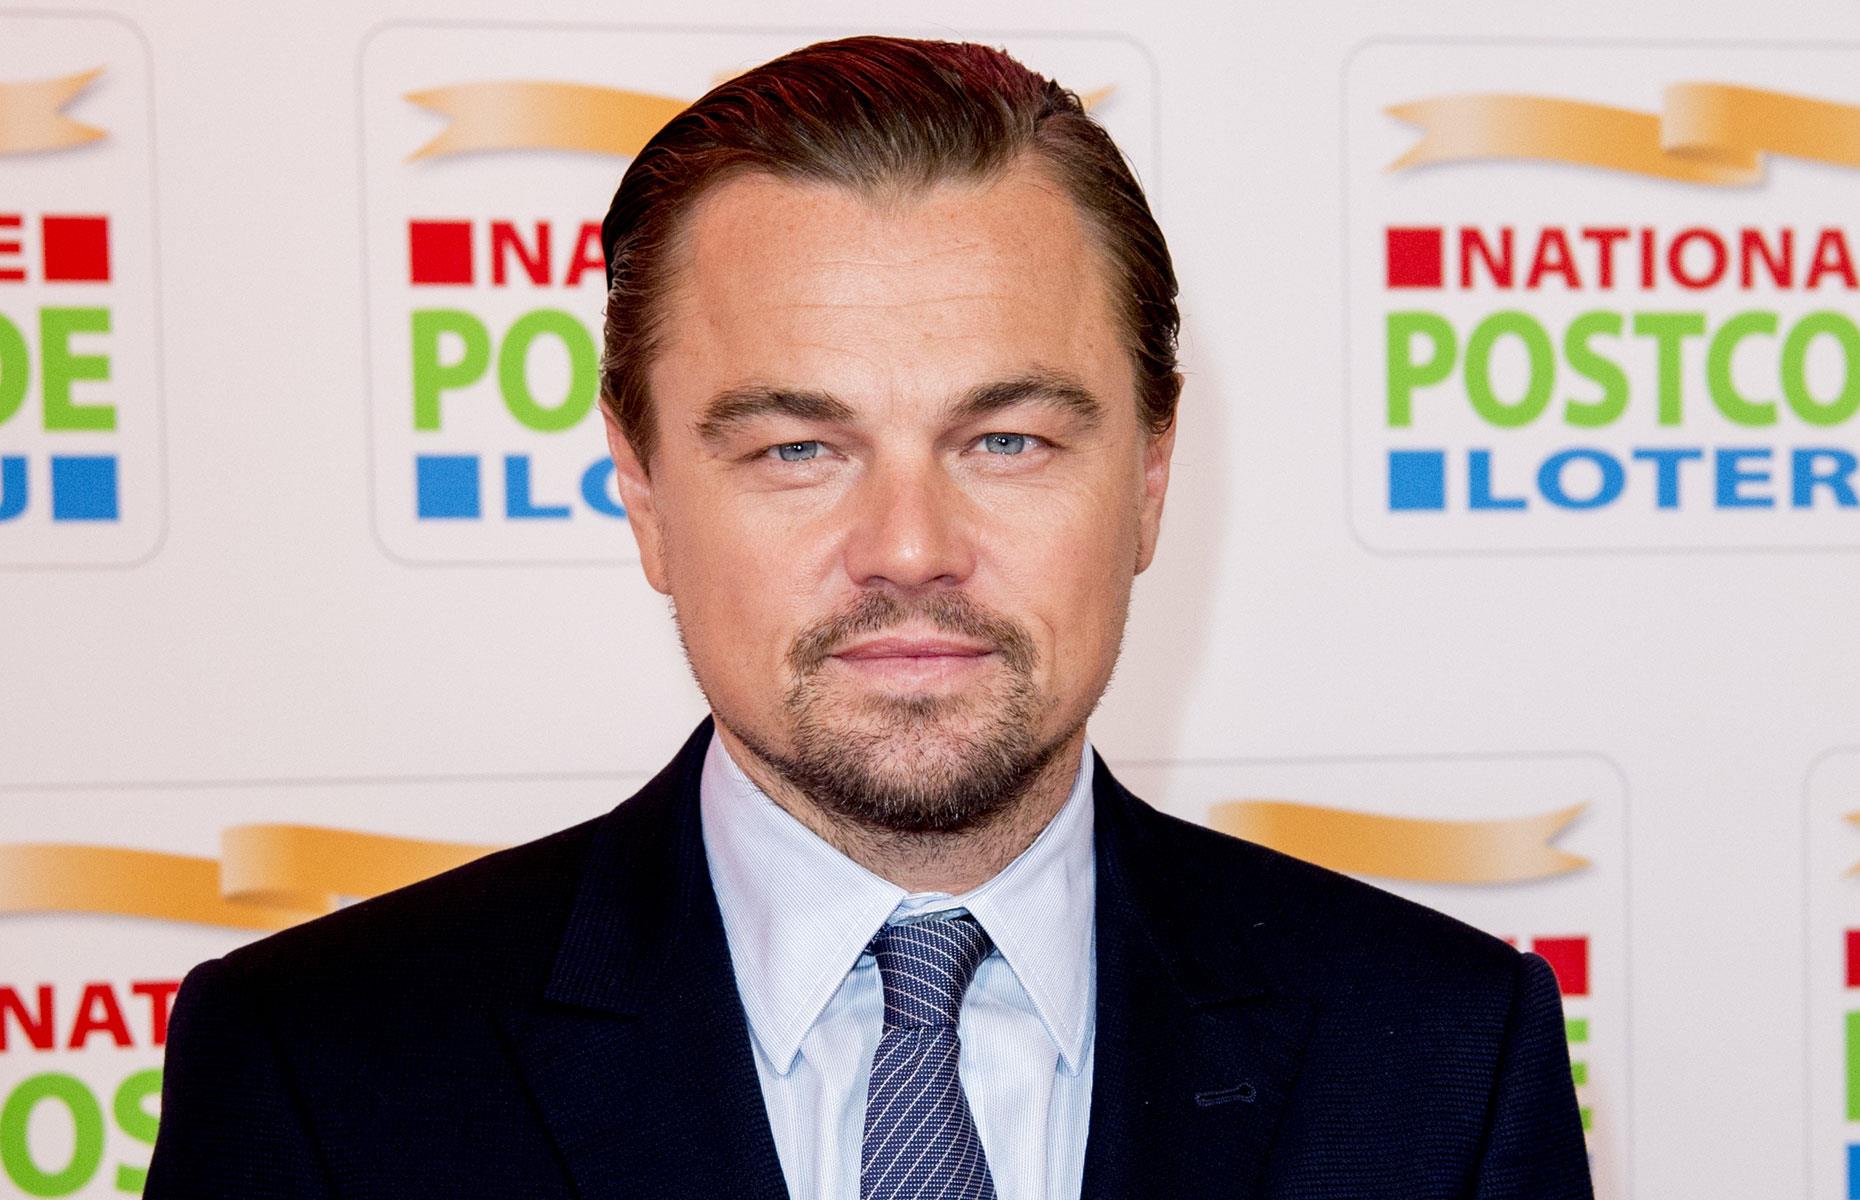 Leonardo DiCaprio's action figures